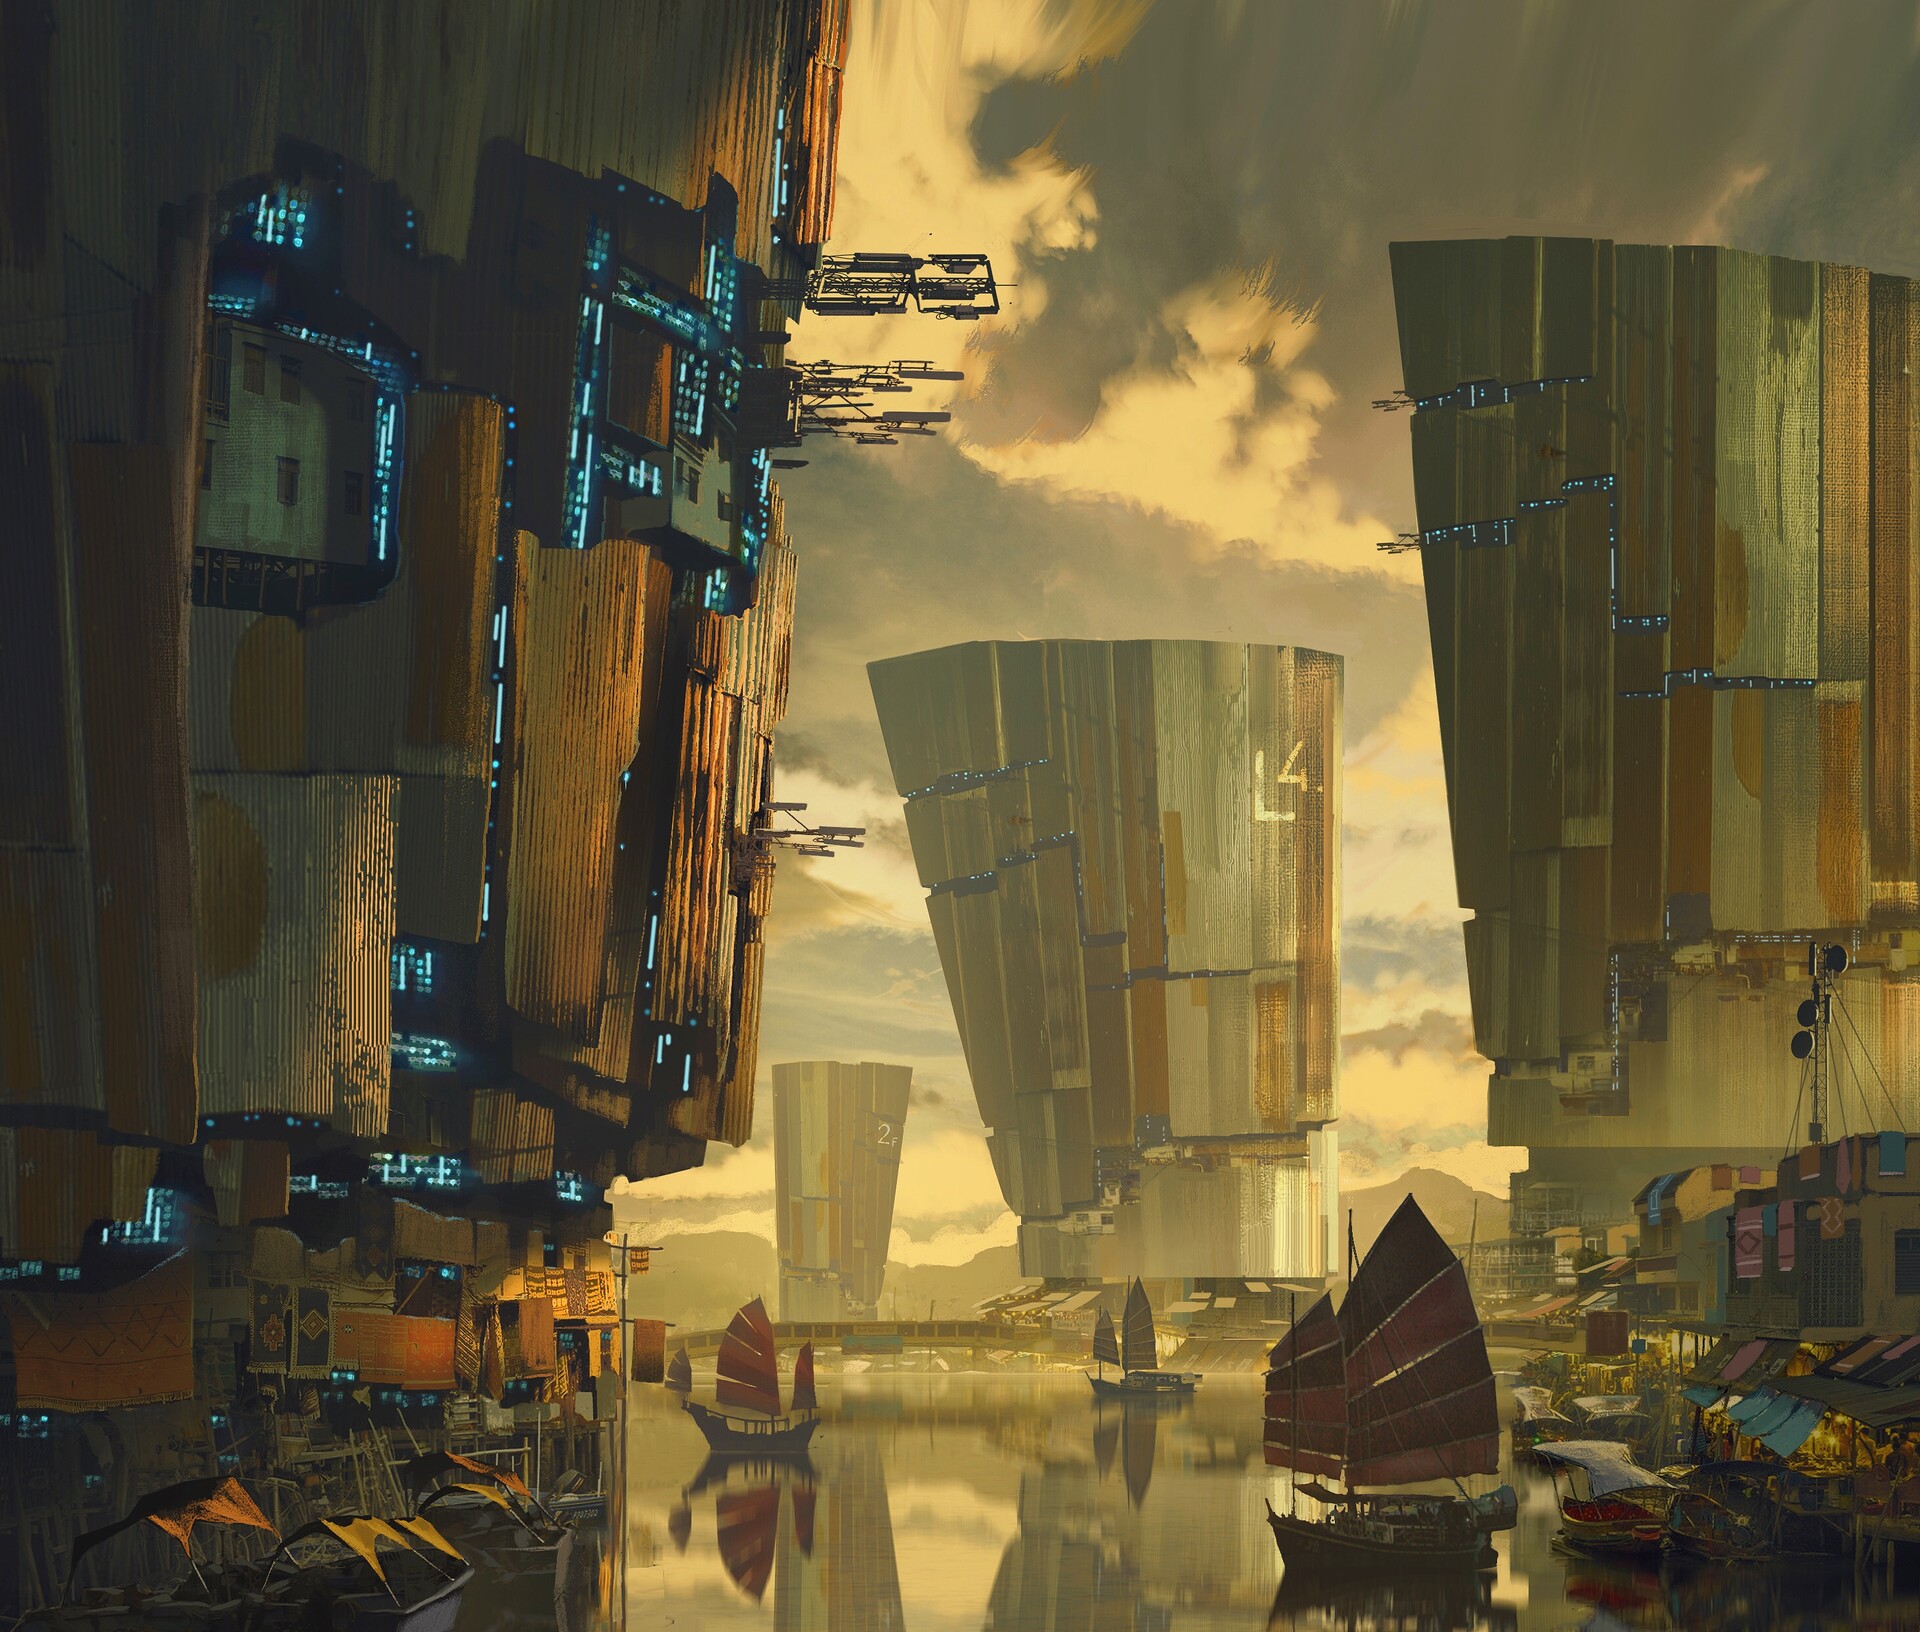 Cyberpunk Fishing Village by Anthony Brault